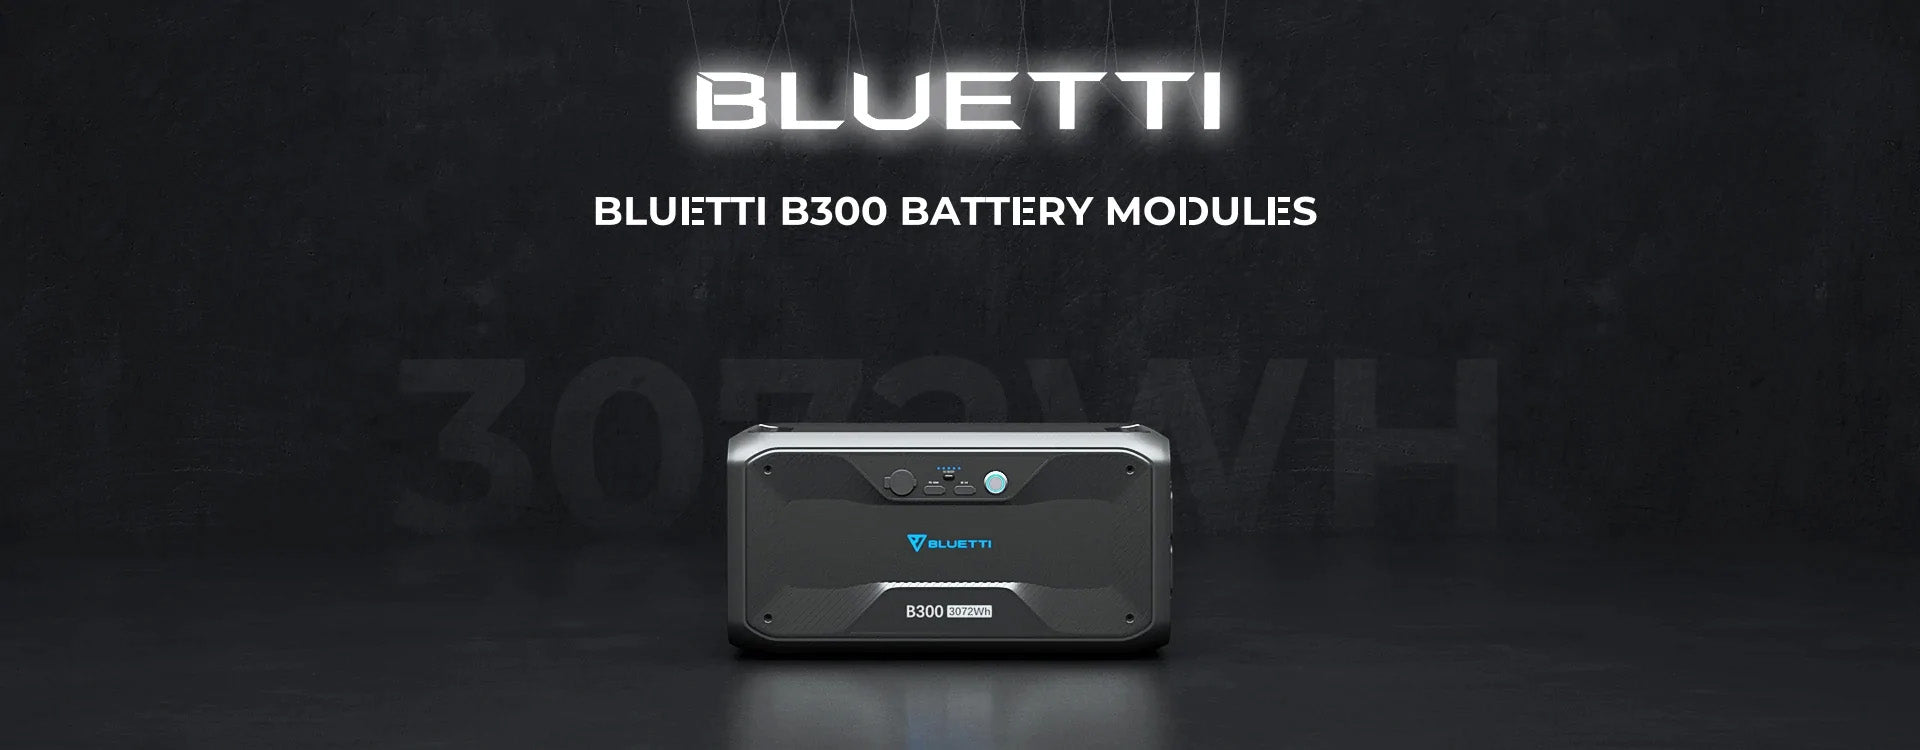 BLUETTI B300 Expansion Battery 3,072Wh - Battery Modules